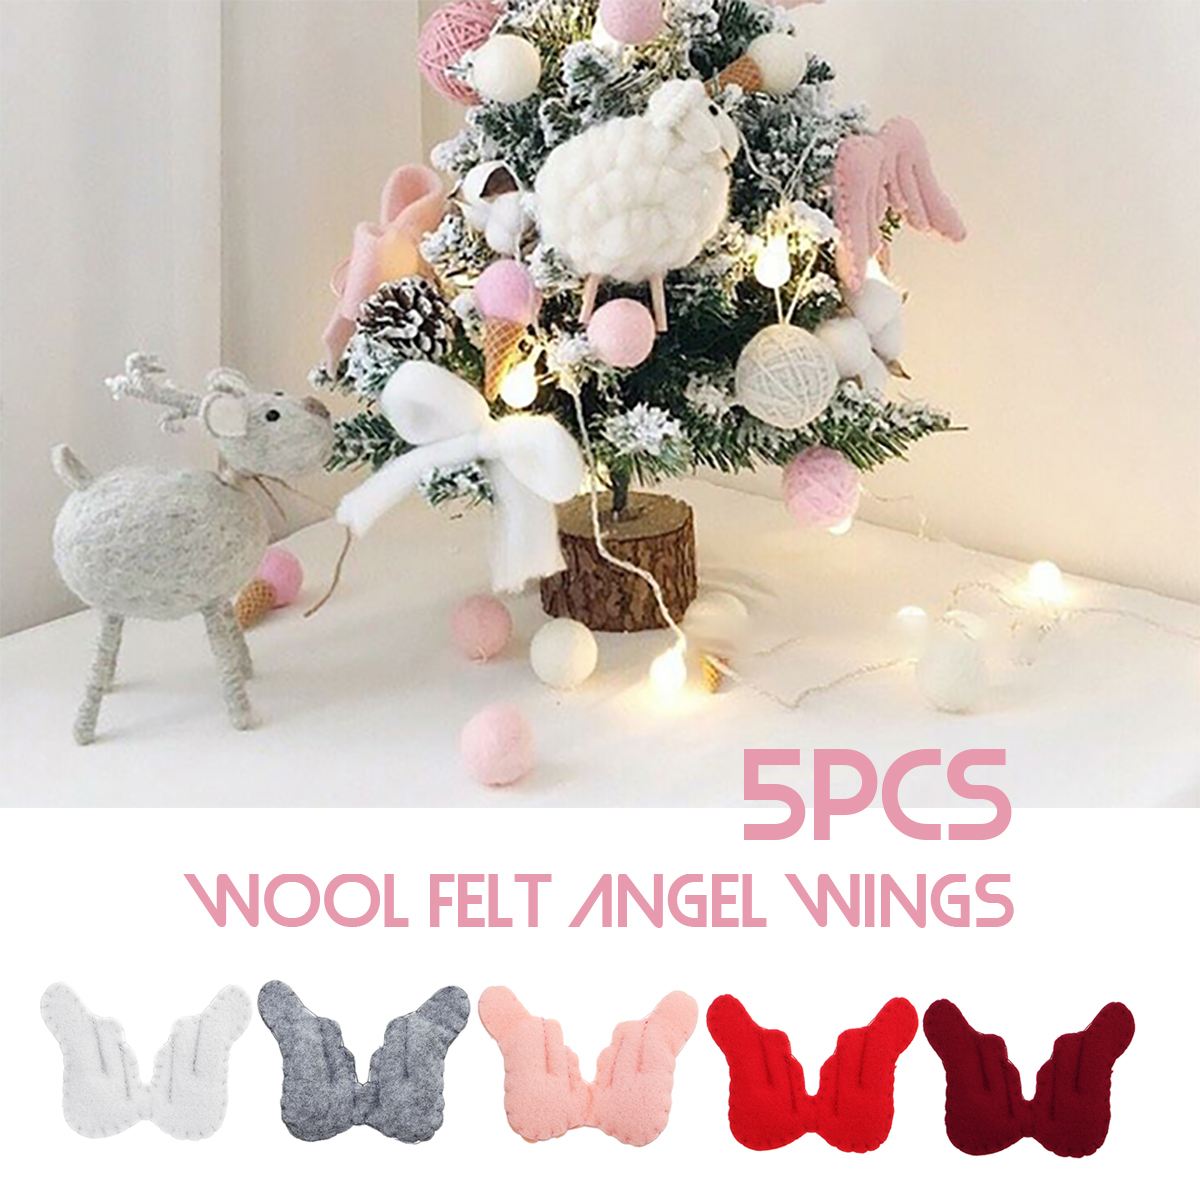 5Pcs-Wool-Felt-Angel-Wings-Decoration-Christmas-Tree-Pendant-Cute-Ornaments-1926321-1